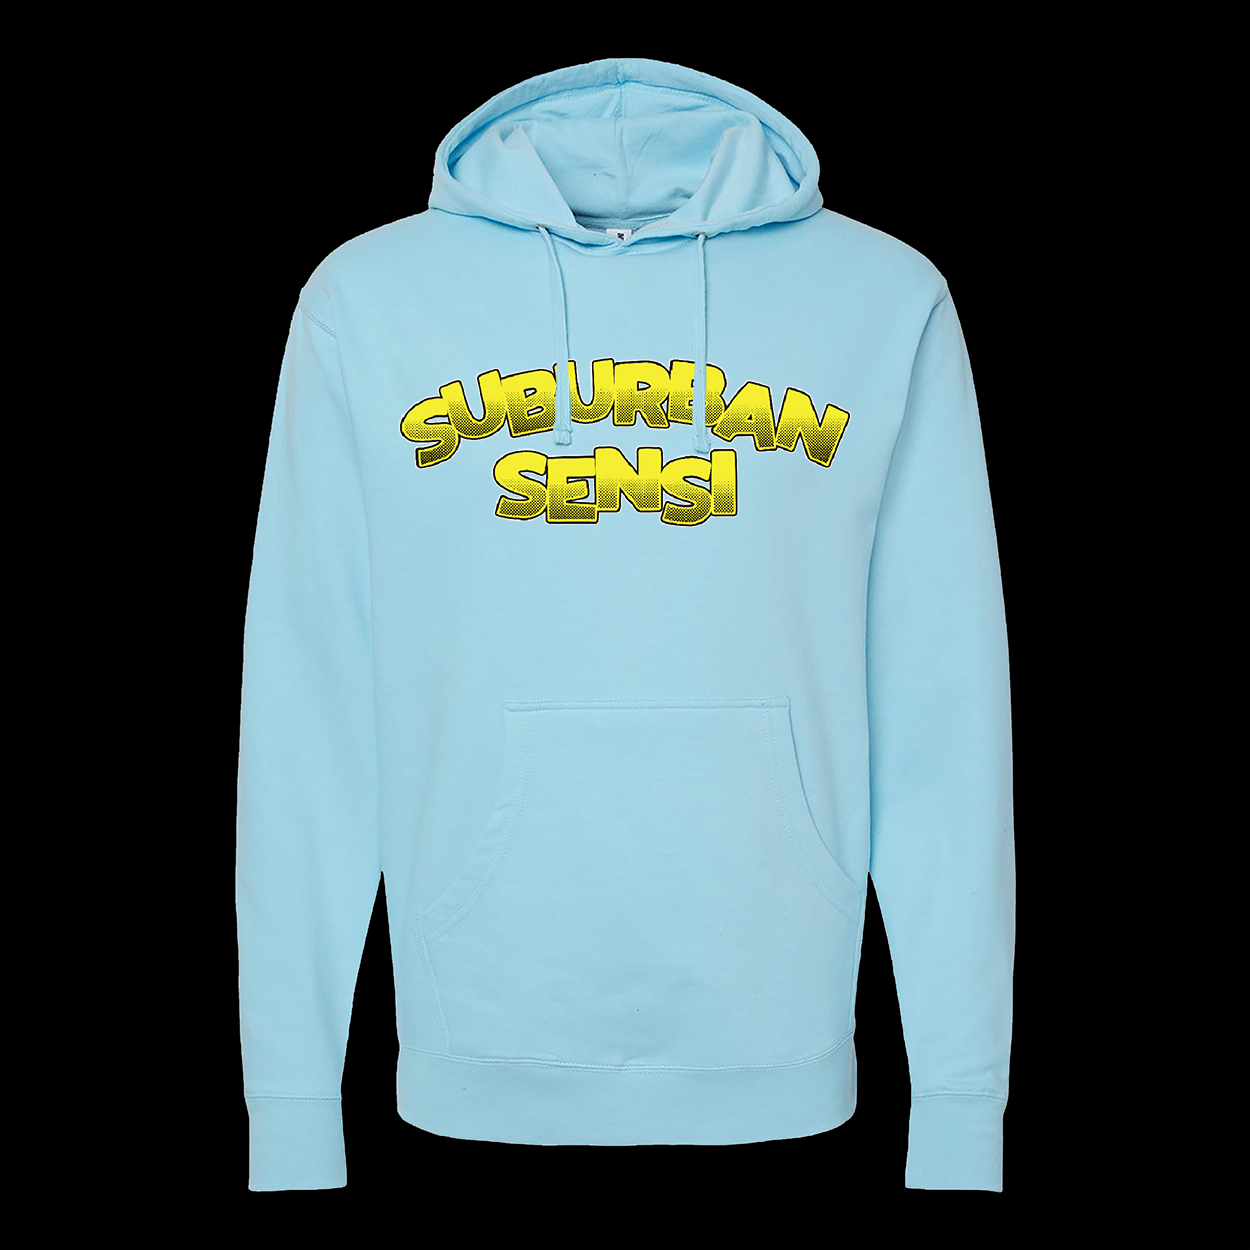 Suburban Sensi logo blue aqua hoodie